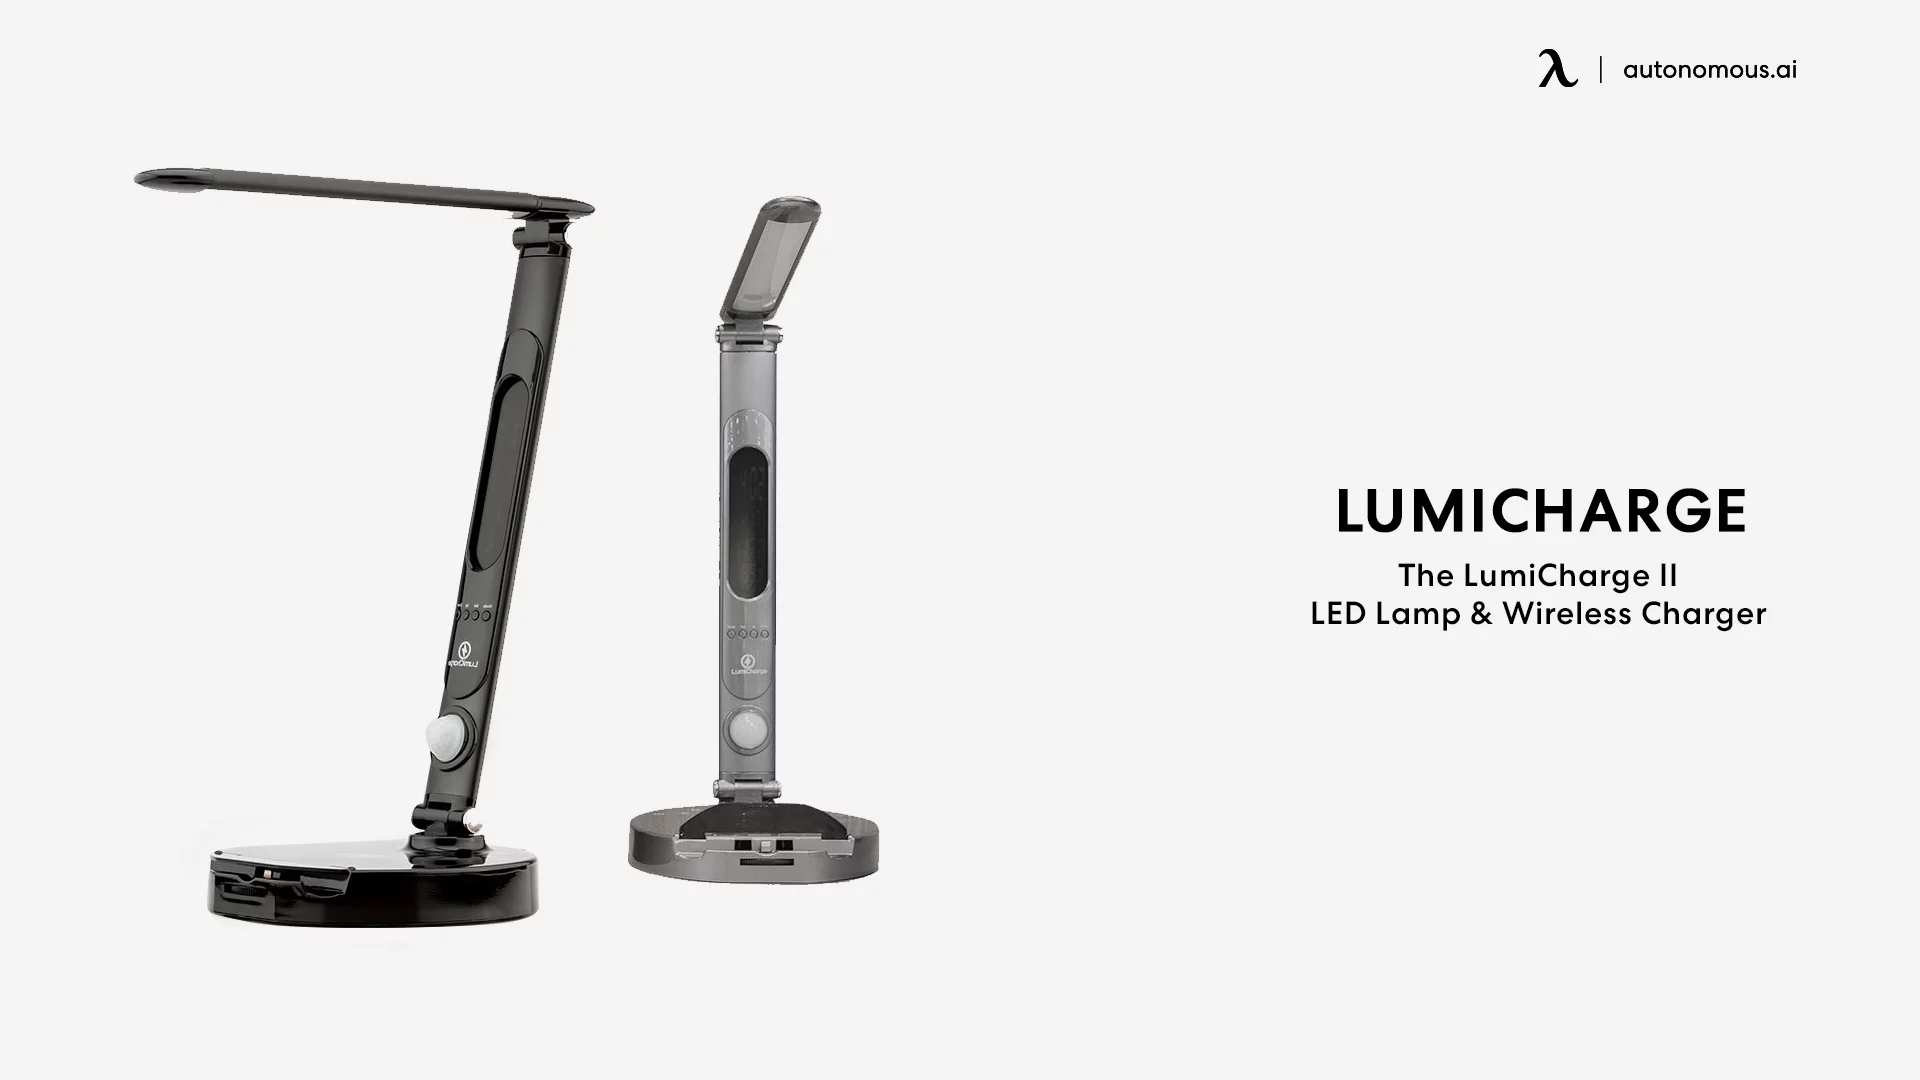 Lumicharge LED Lamp best desk lamps for eyes